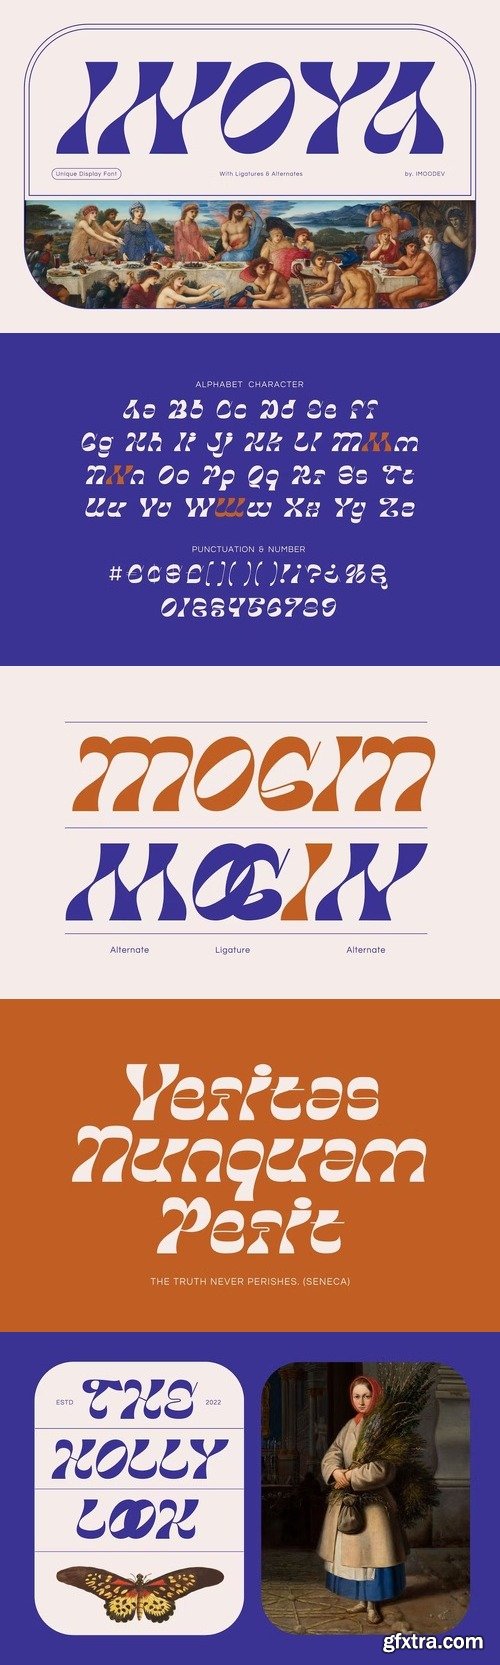 Inoya - Unique Typeface